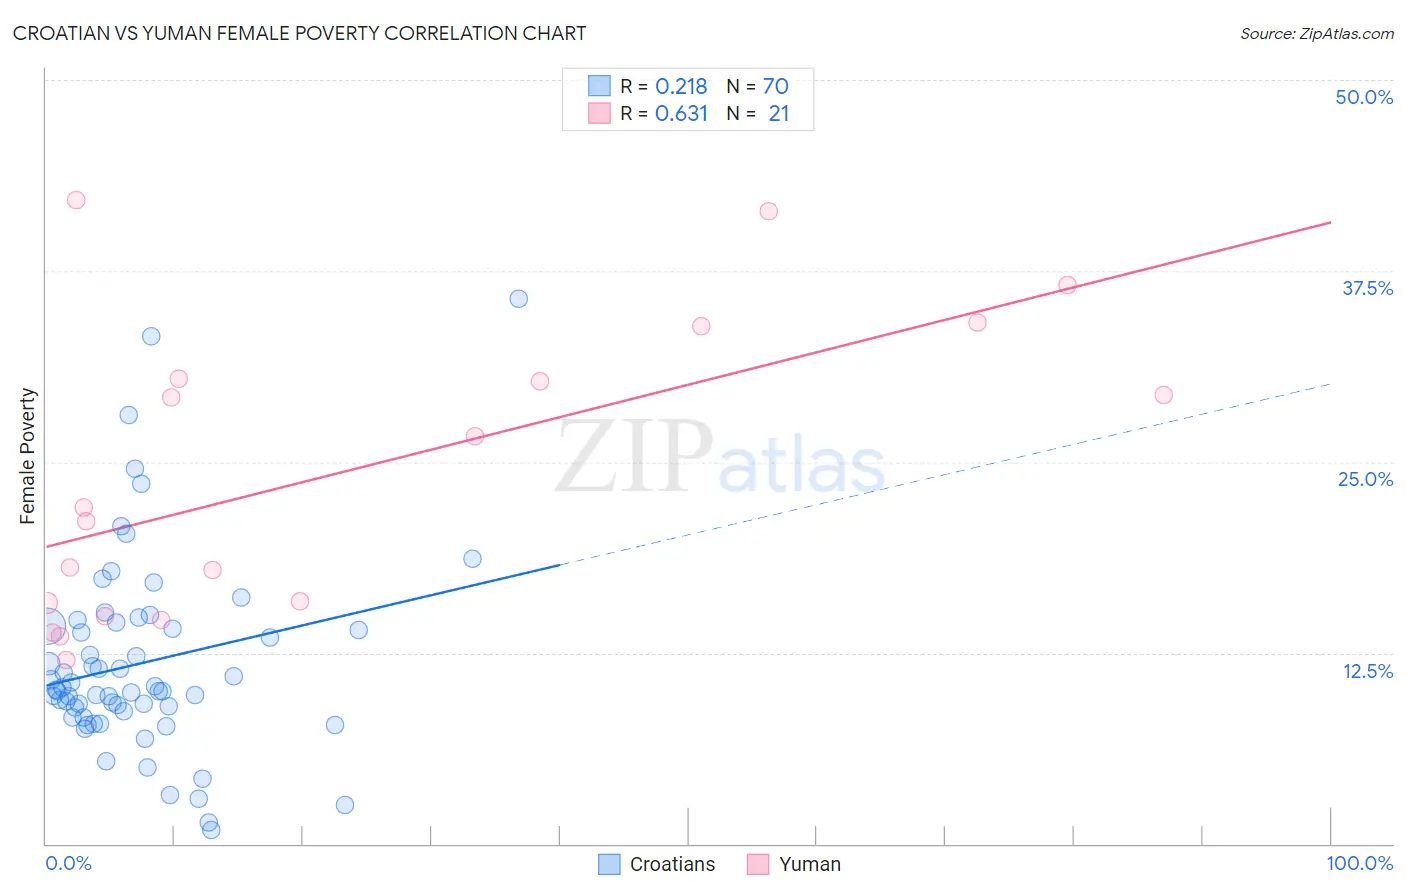 Croatian vs Yuman Female Poverty